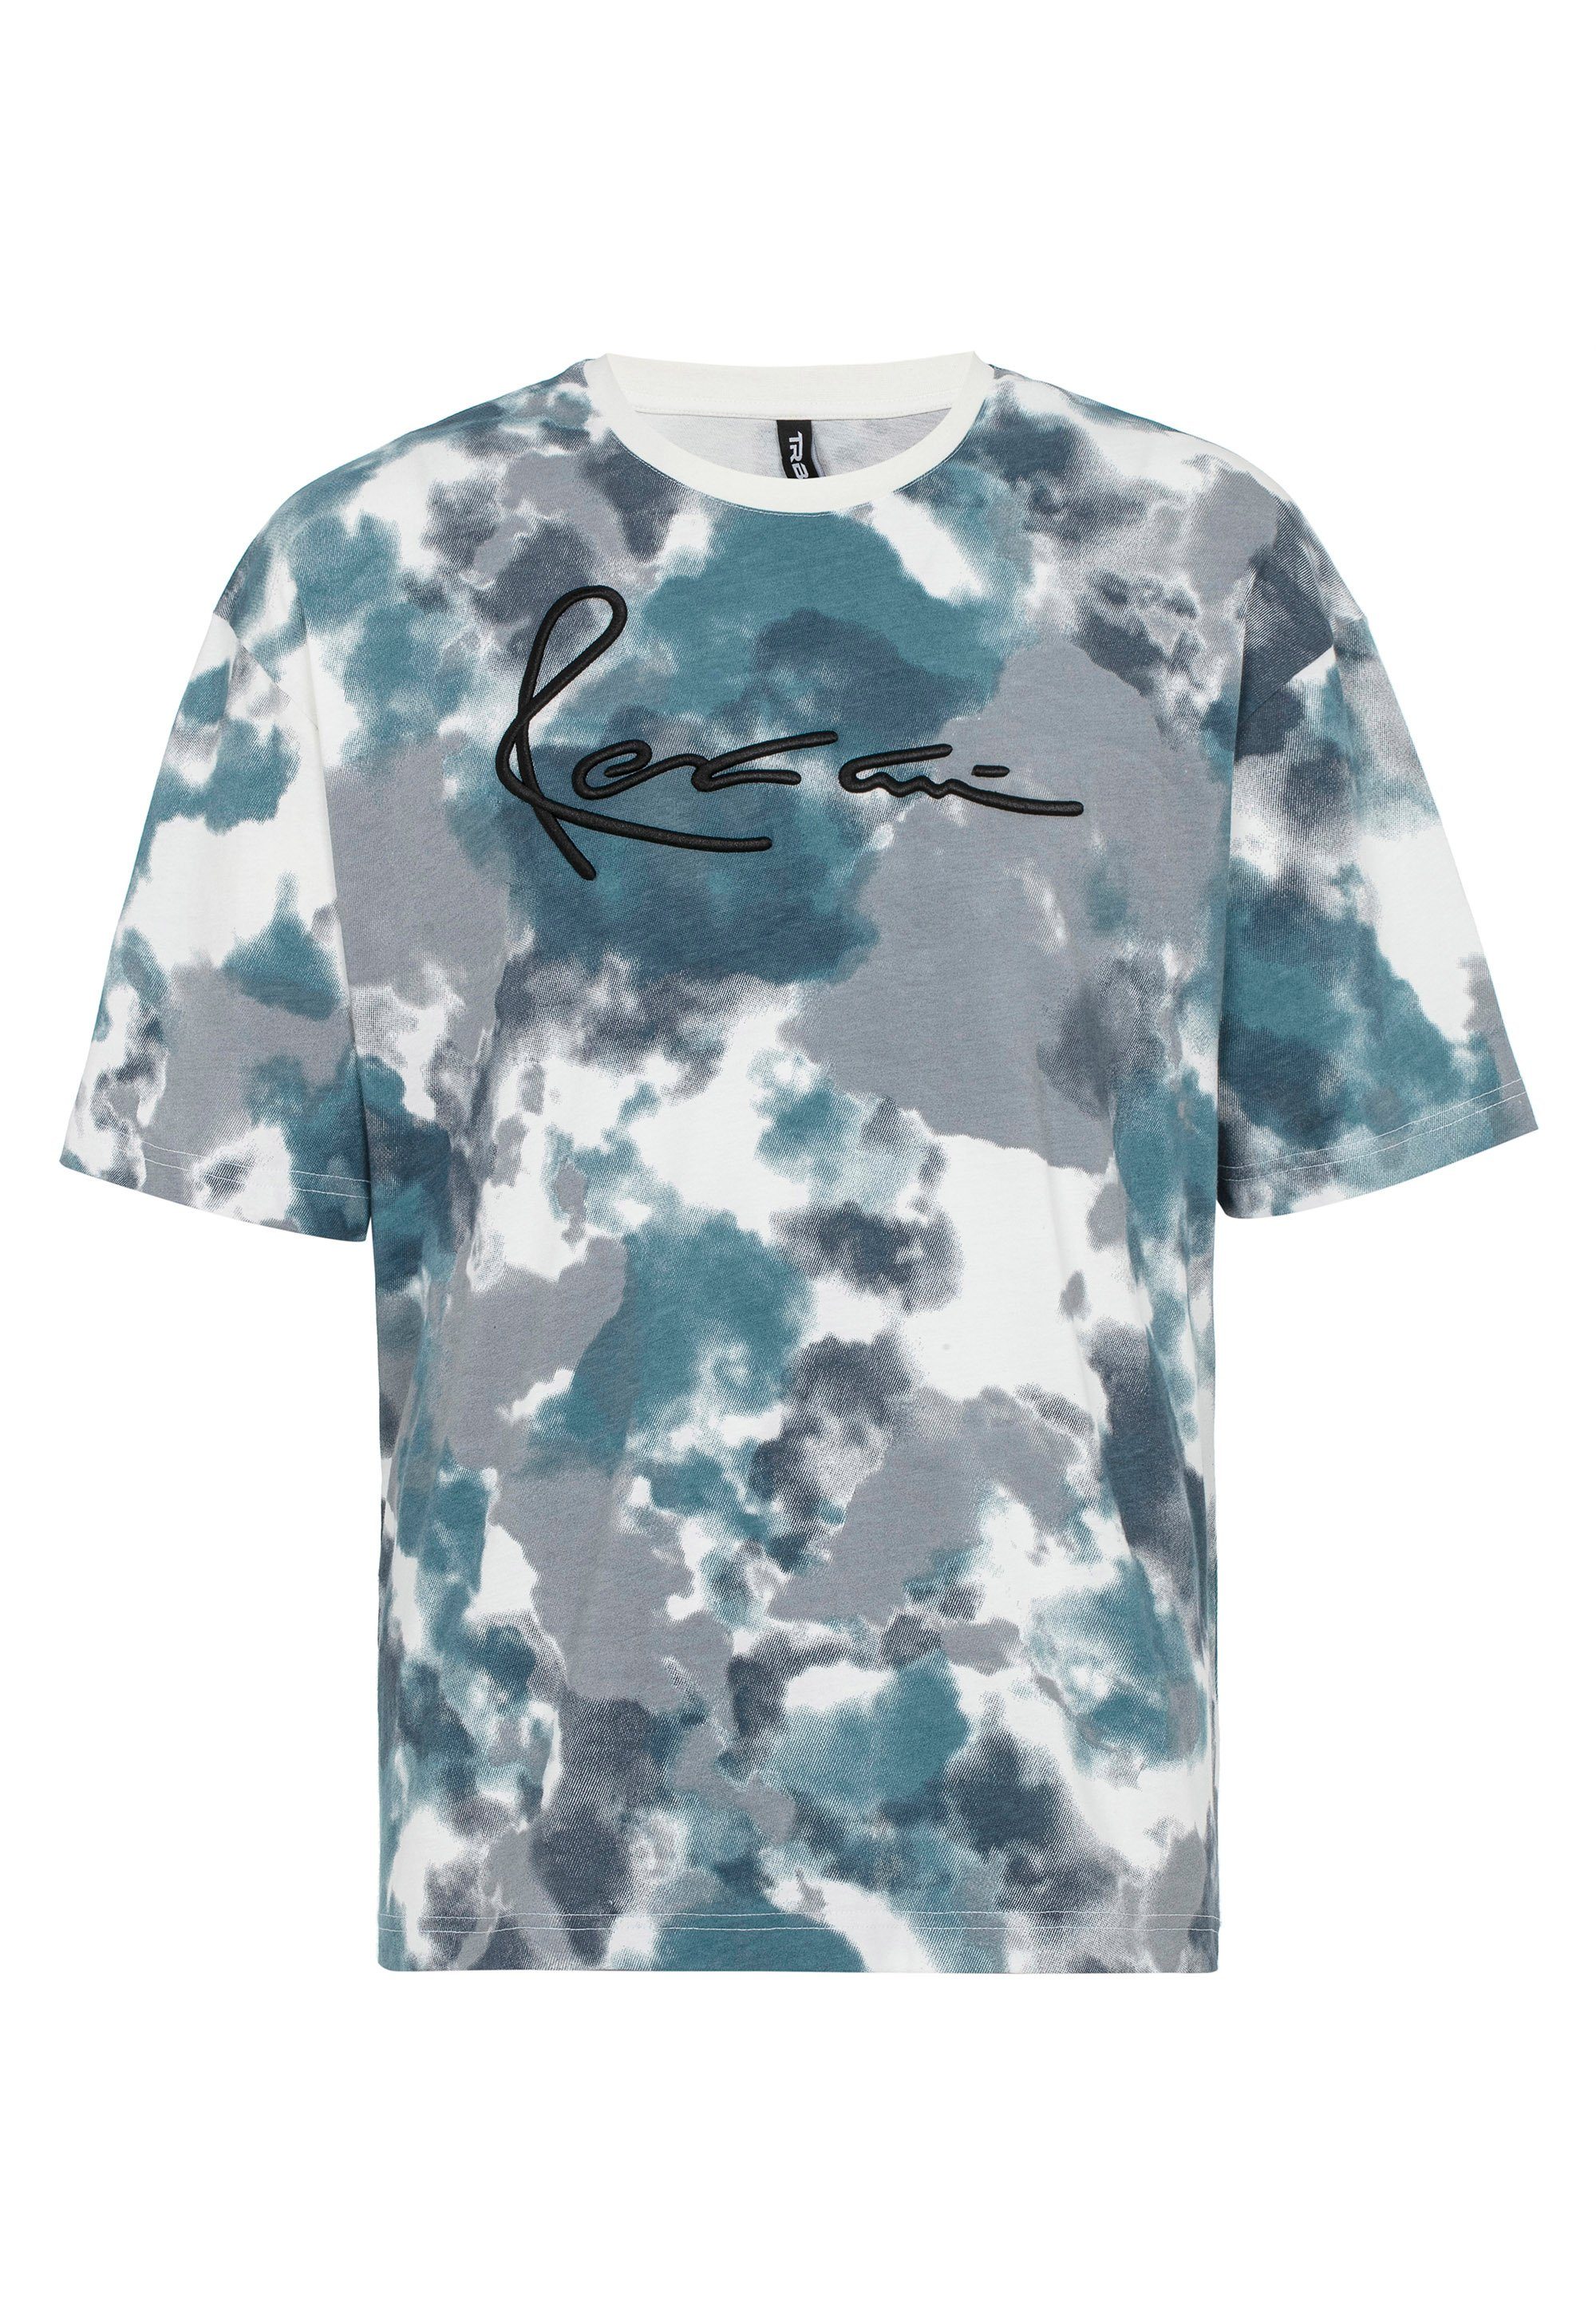 RedBridge T-Shirt Coral Springs modischen blau Batik-Look im